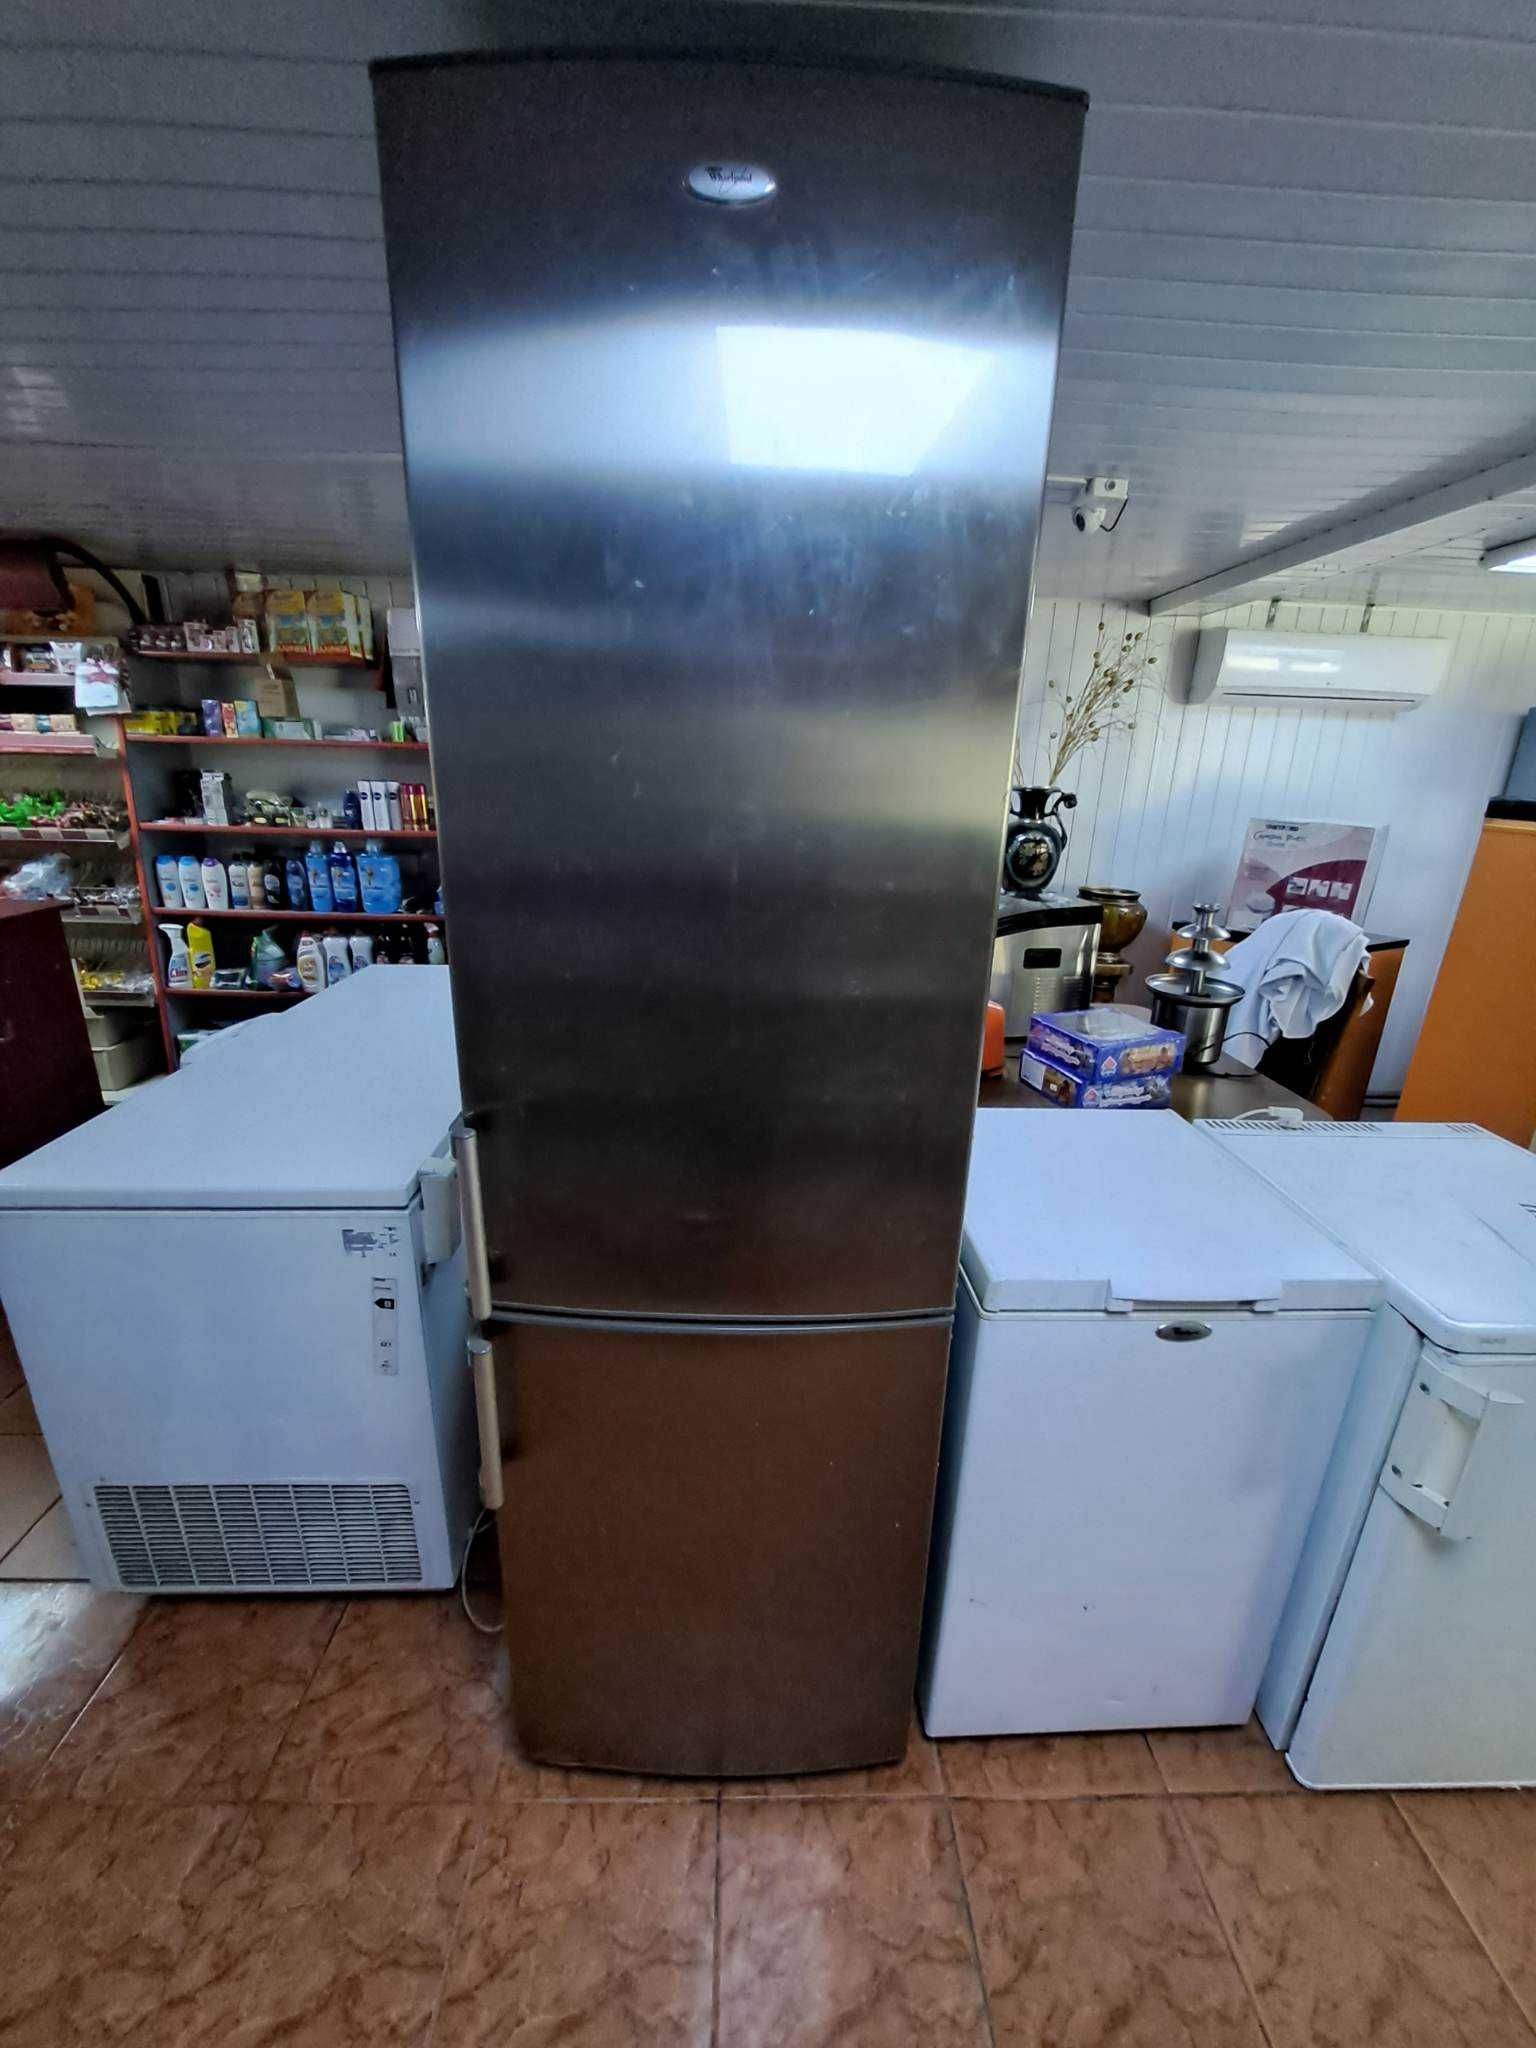 Холодильник WHIRLPOOL WBE 3712 A+XF